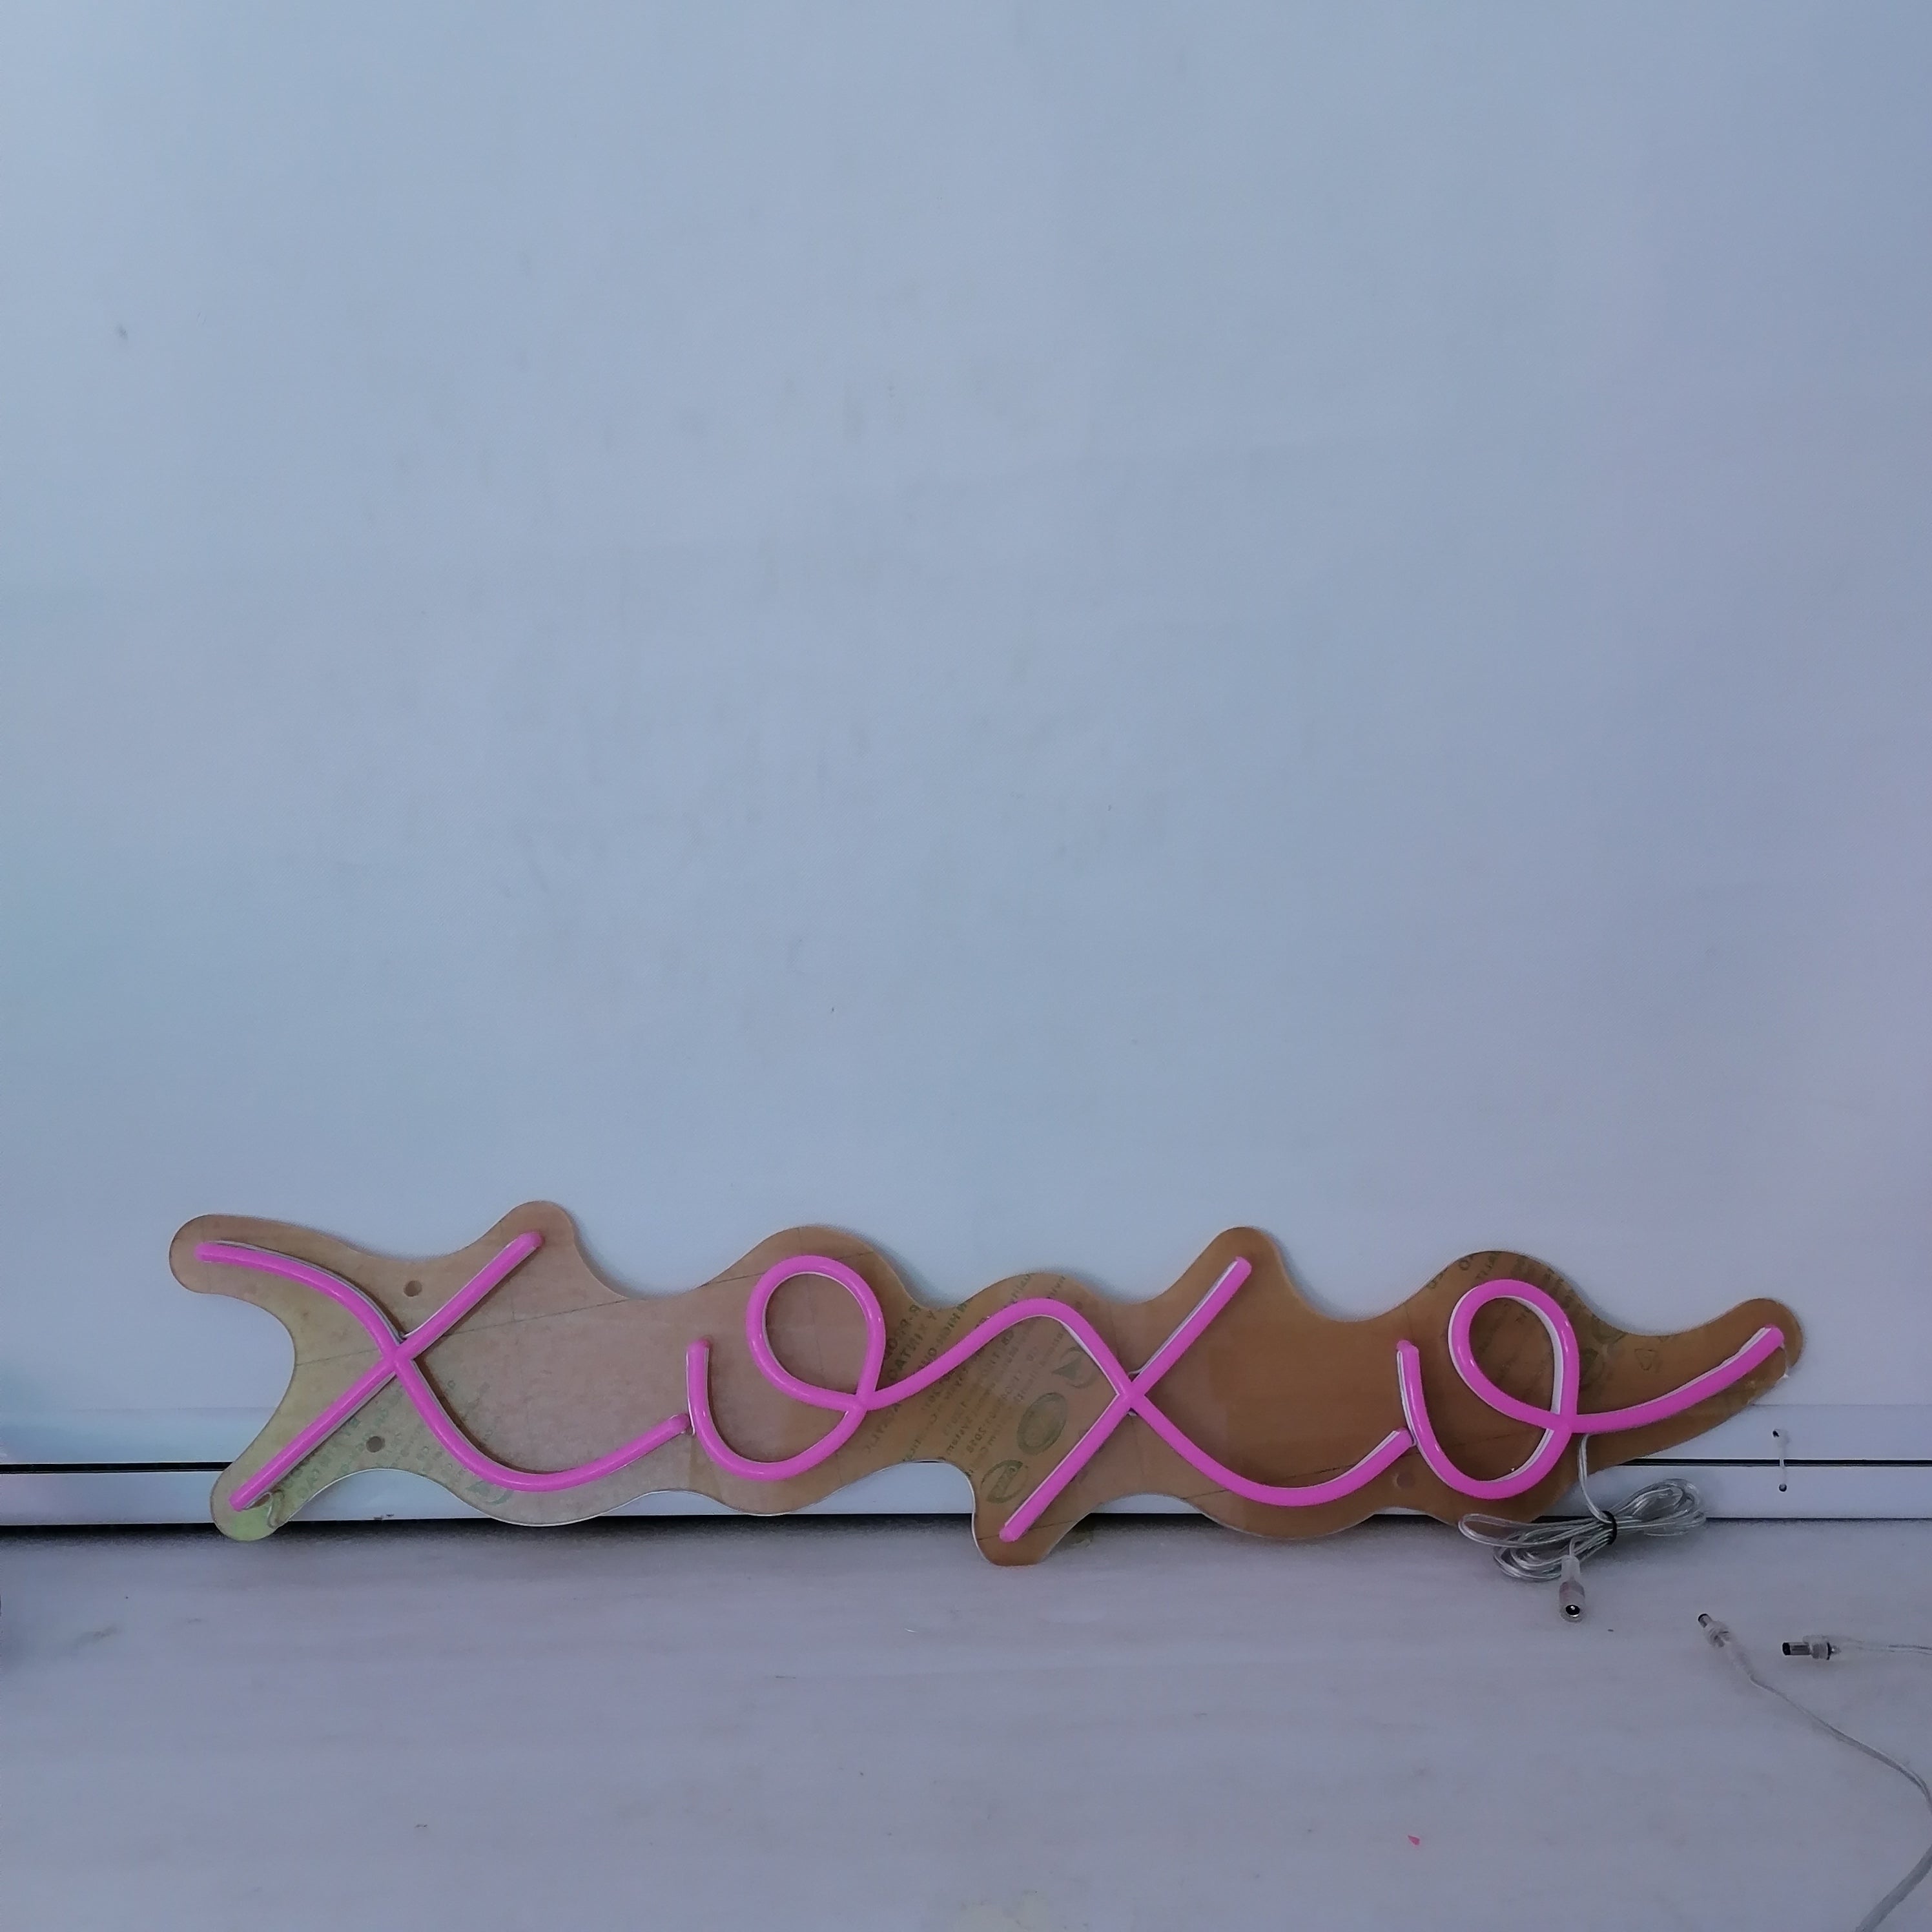 "XOXO" LED Neon Sign